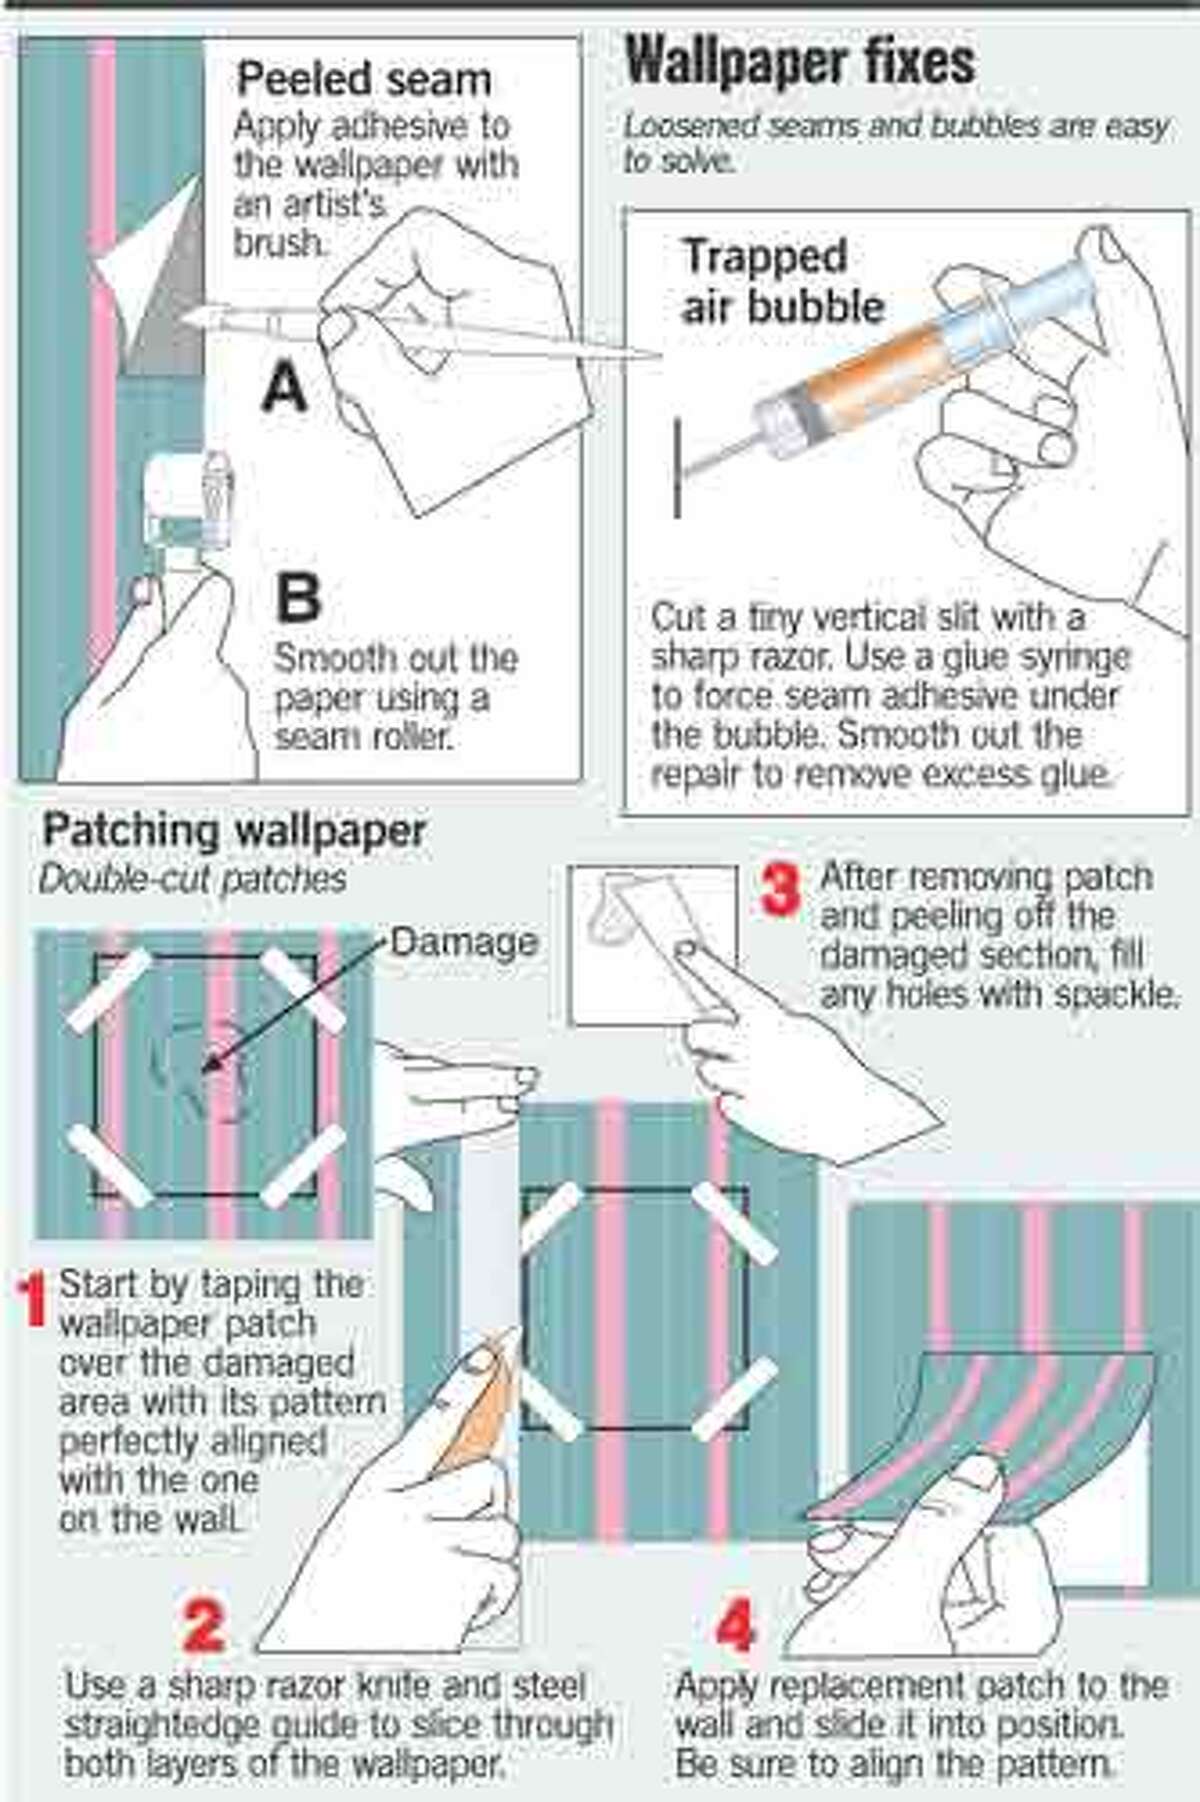 Here's the secret to repairing wallpaper